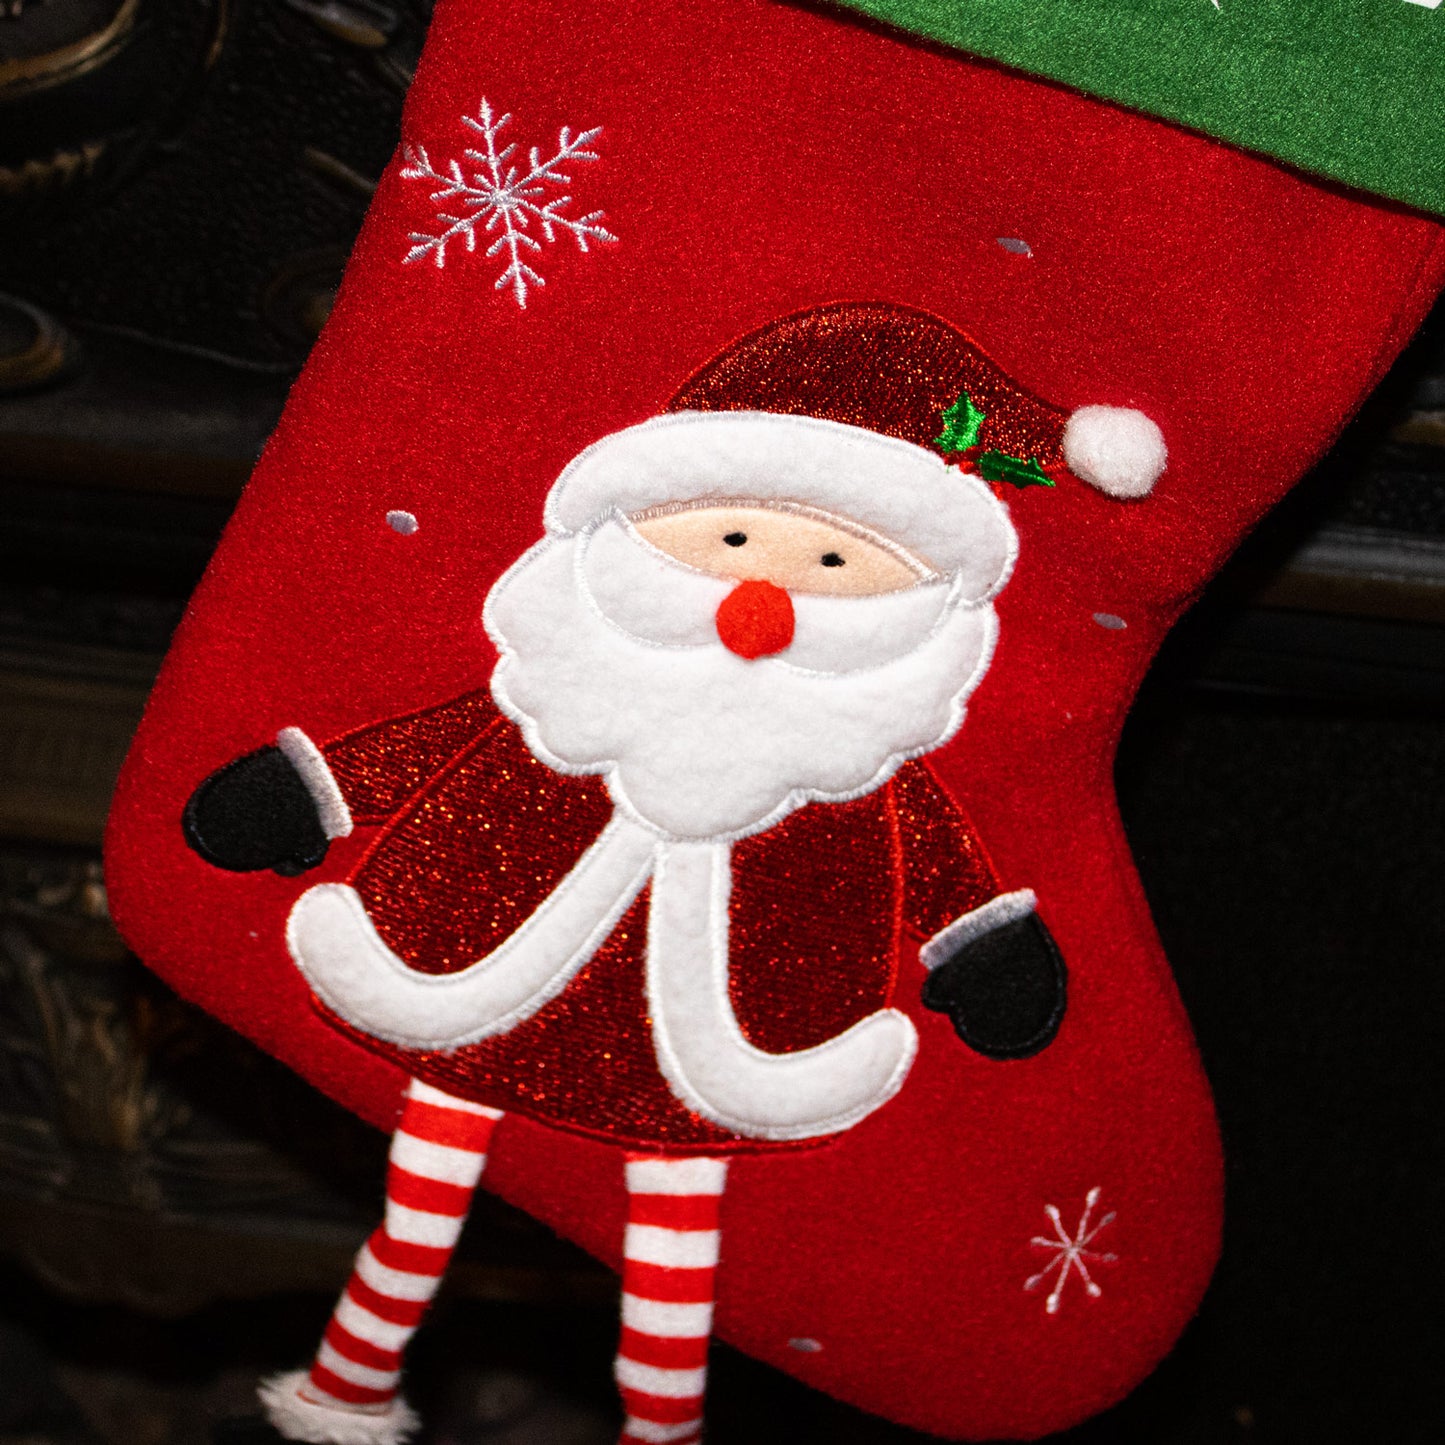 Santa Christmas Stocking with dangling legs